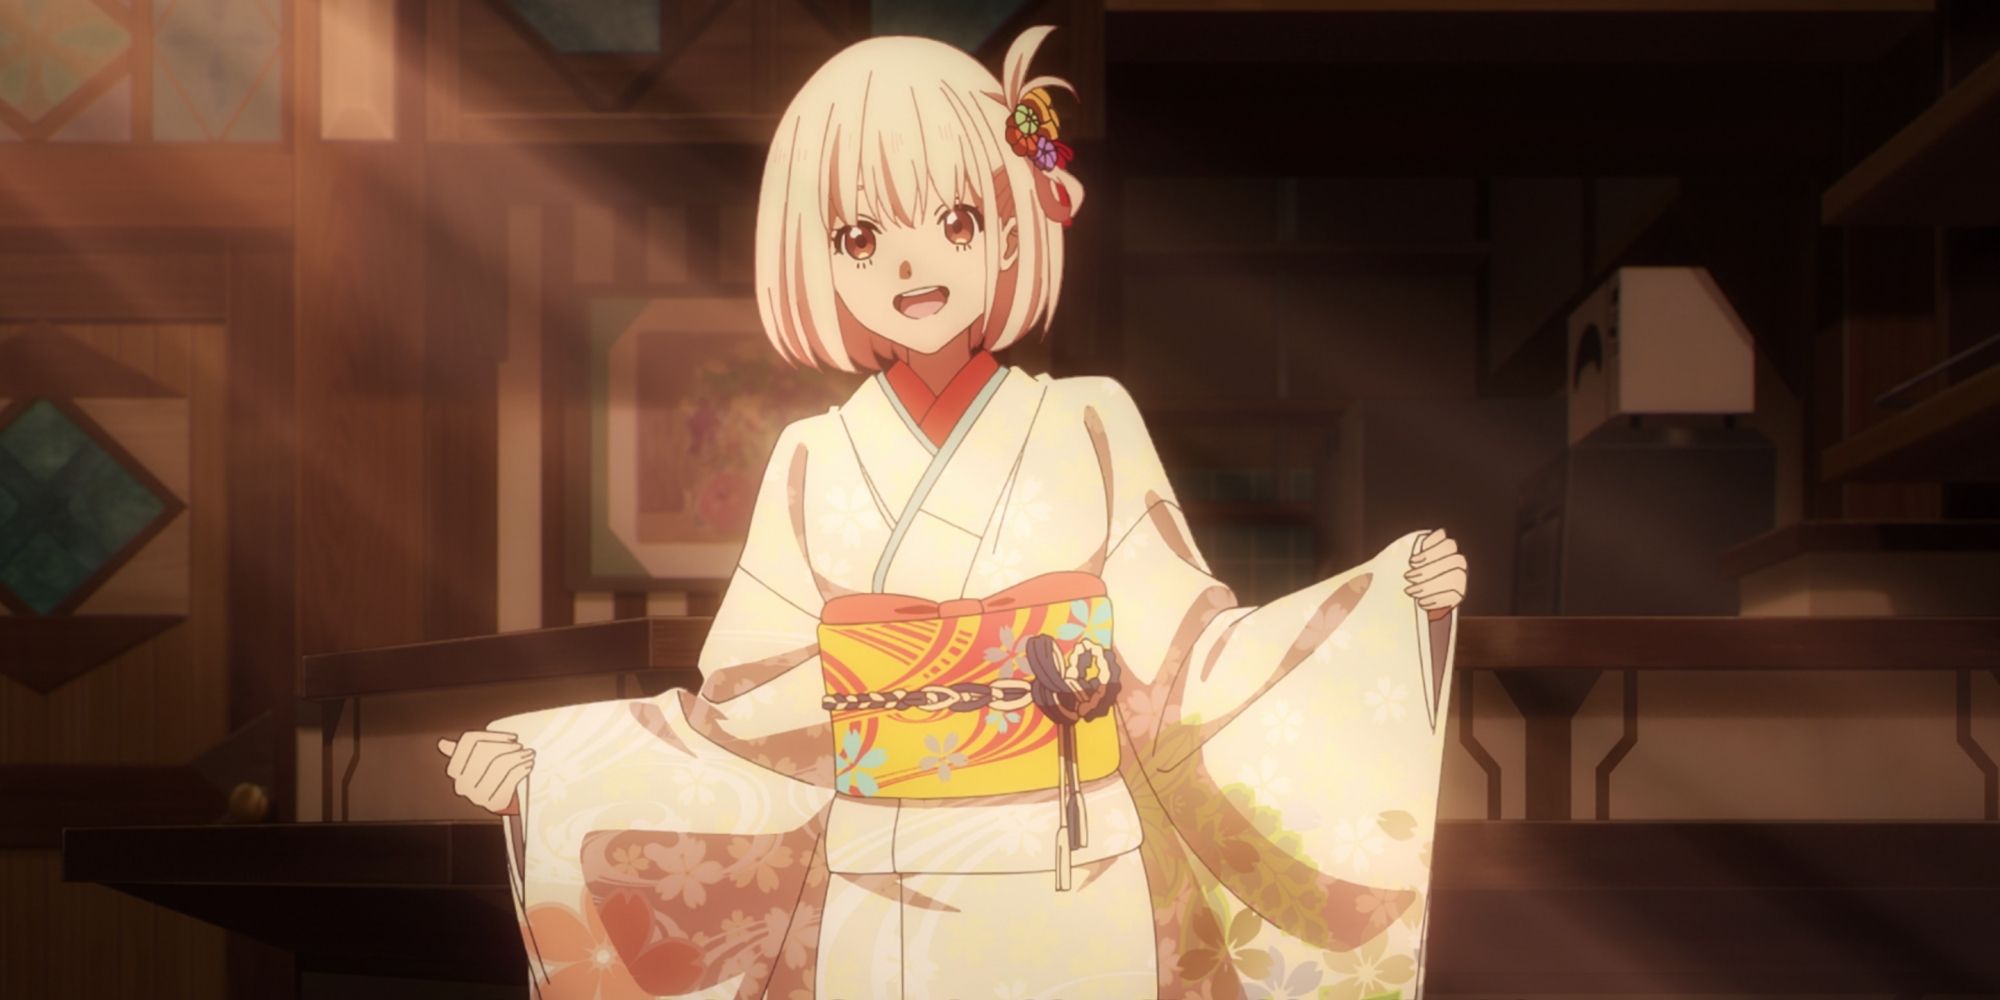 Chisato shows off her kimono in Lycoris Recoil.